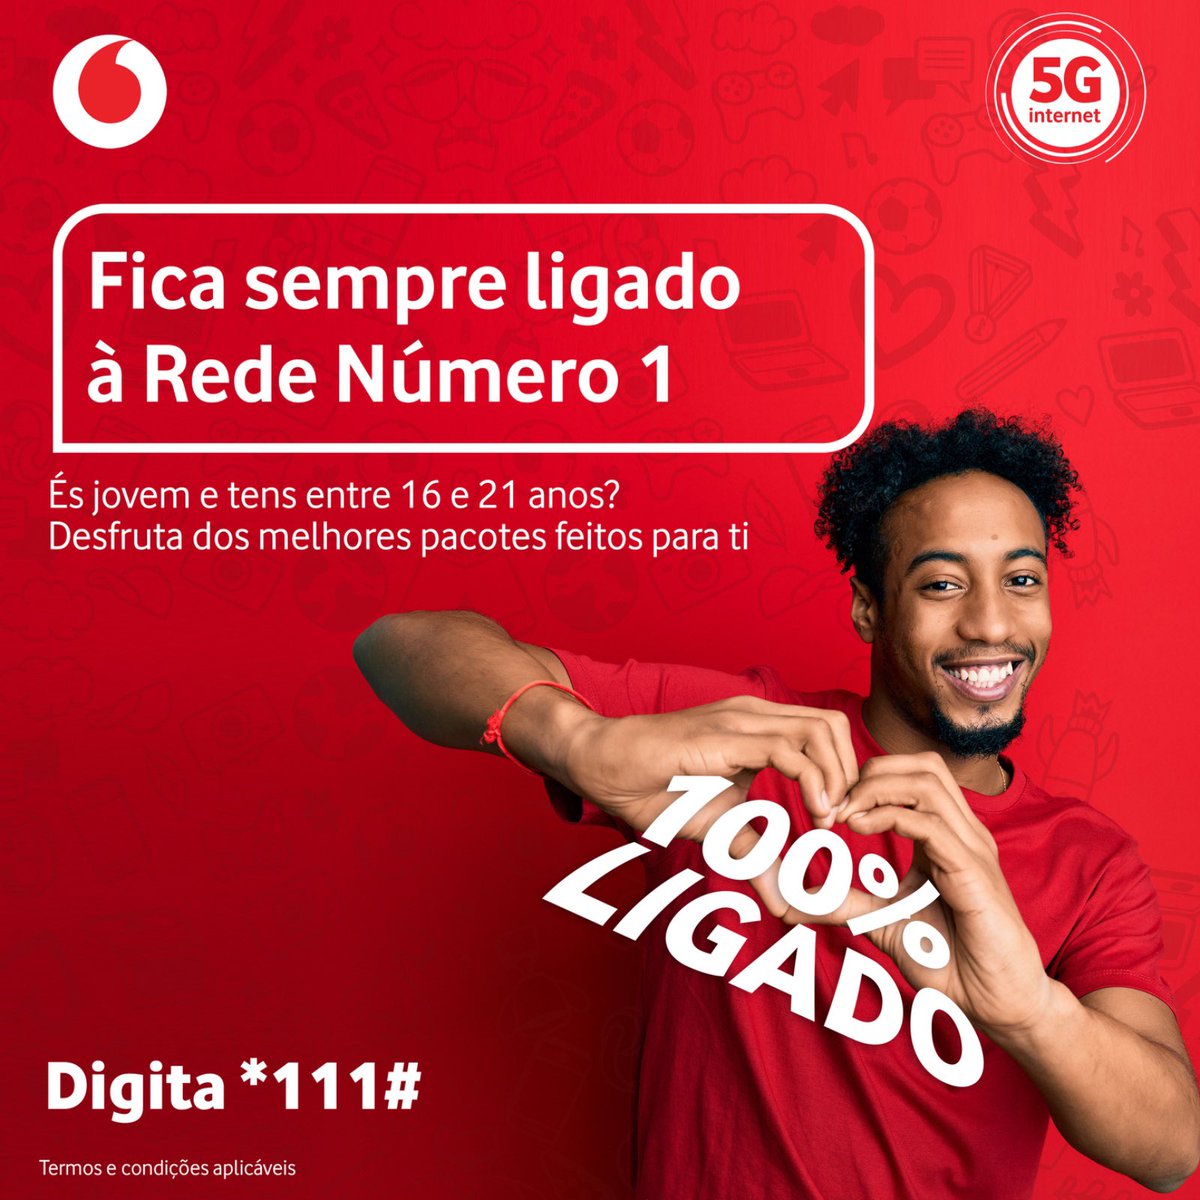 Vodacom Moçambique (@VodacomMz) on Twitter photo 2024-05-09 15:29:34